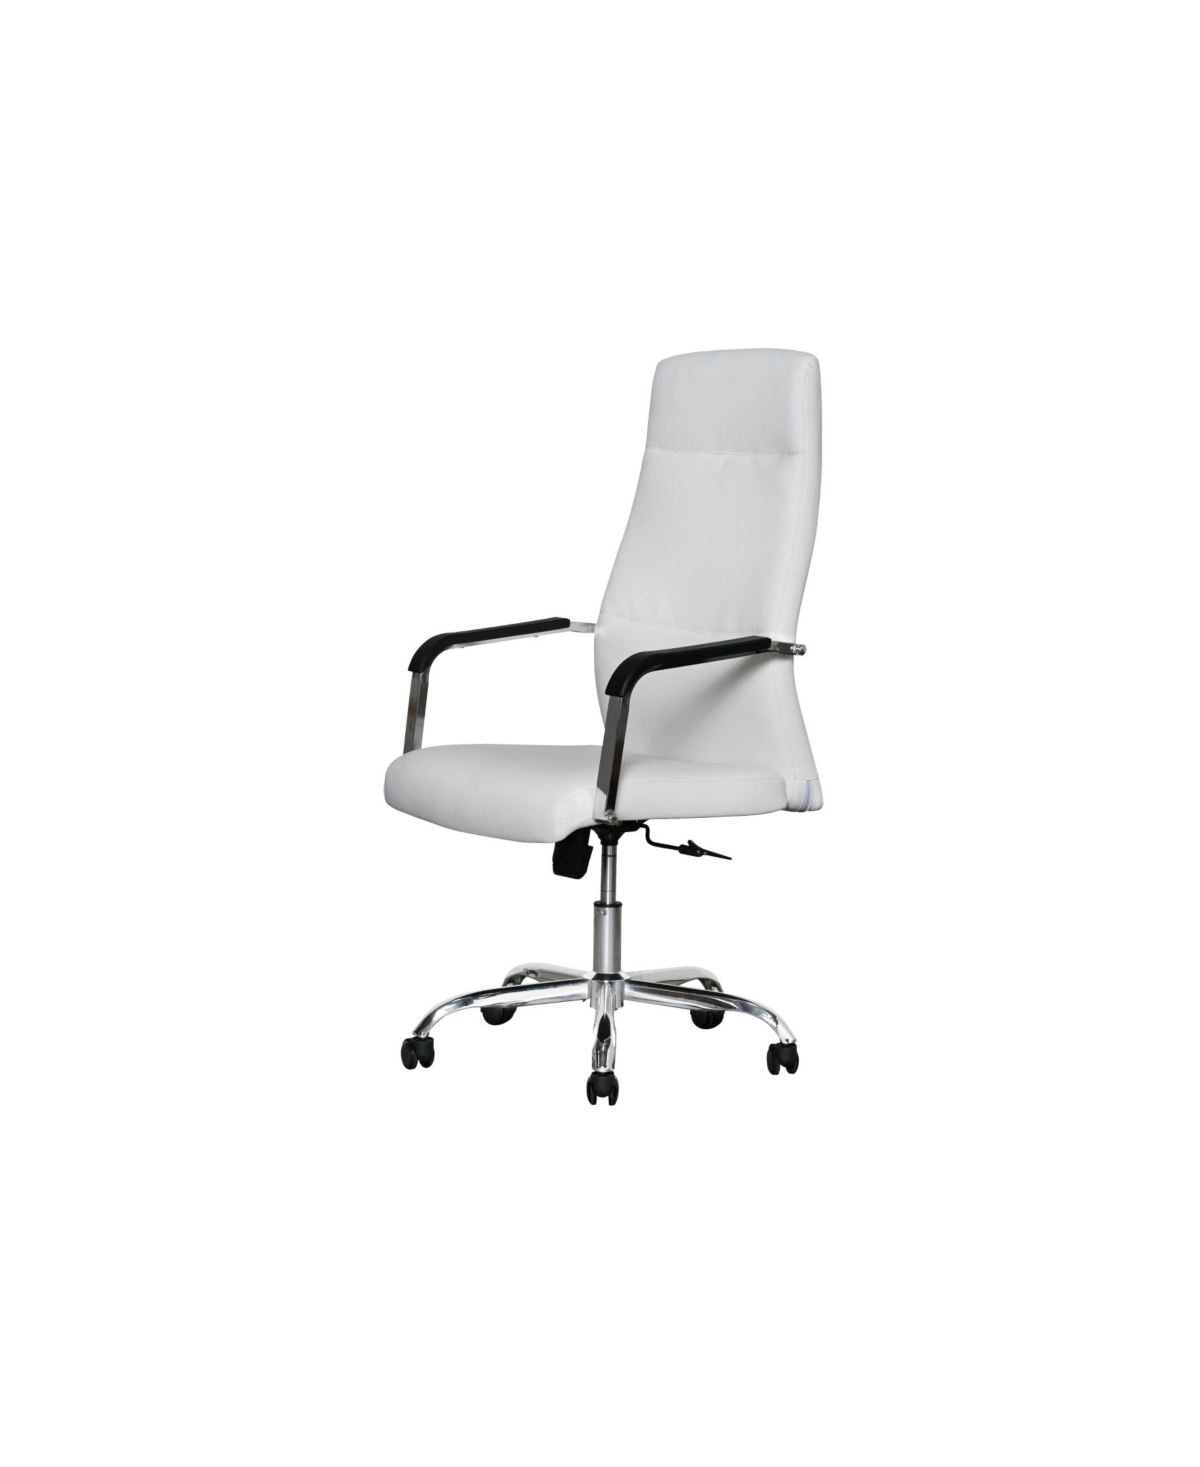 Abbyson Living Pella Adjustable High Back Office Chair